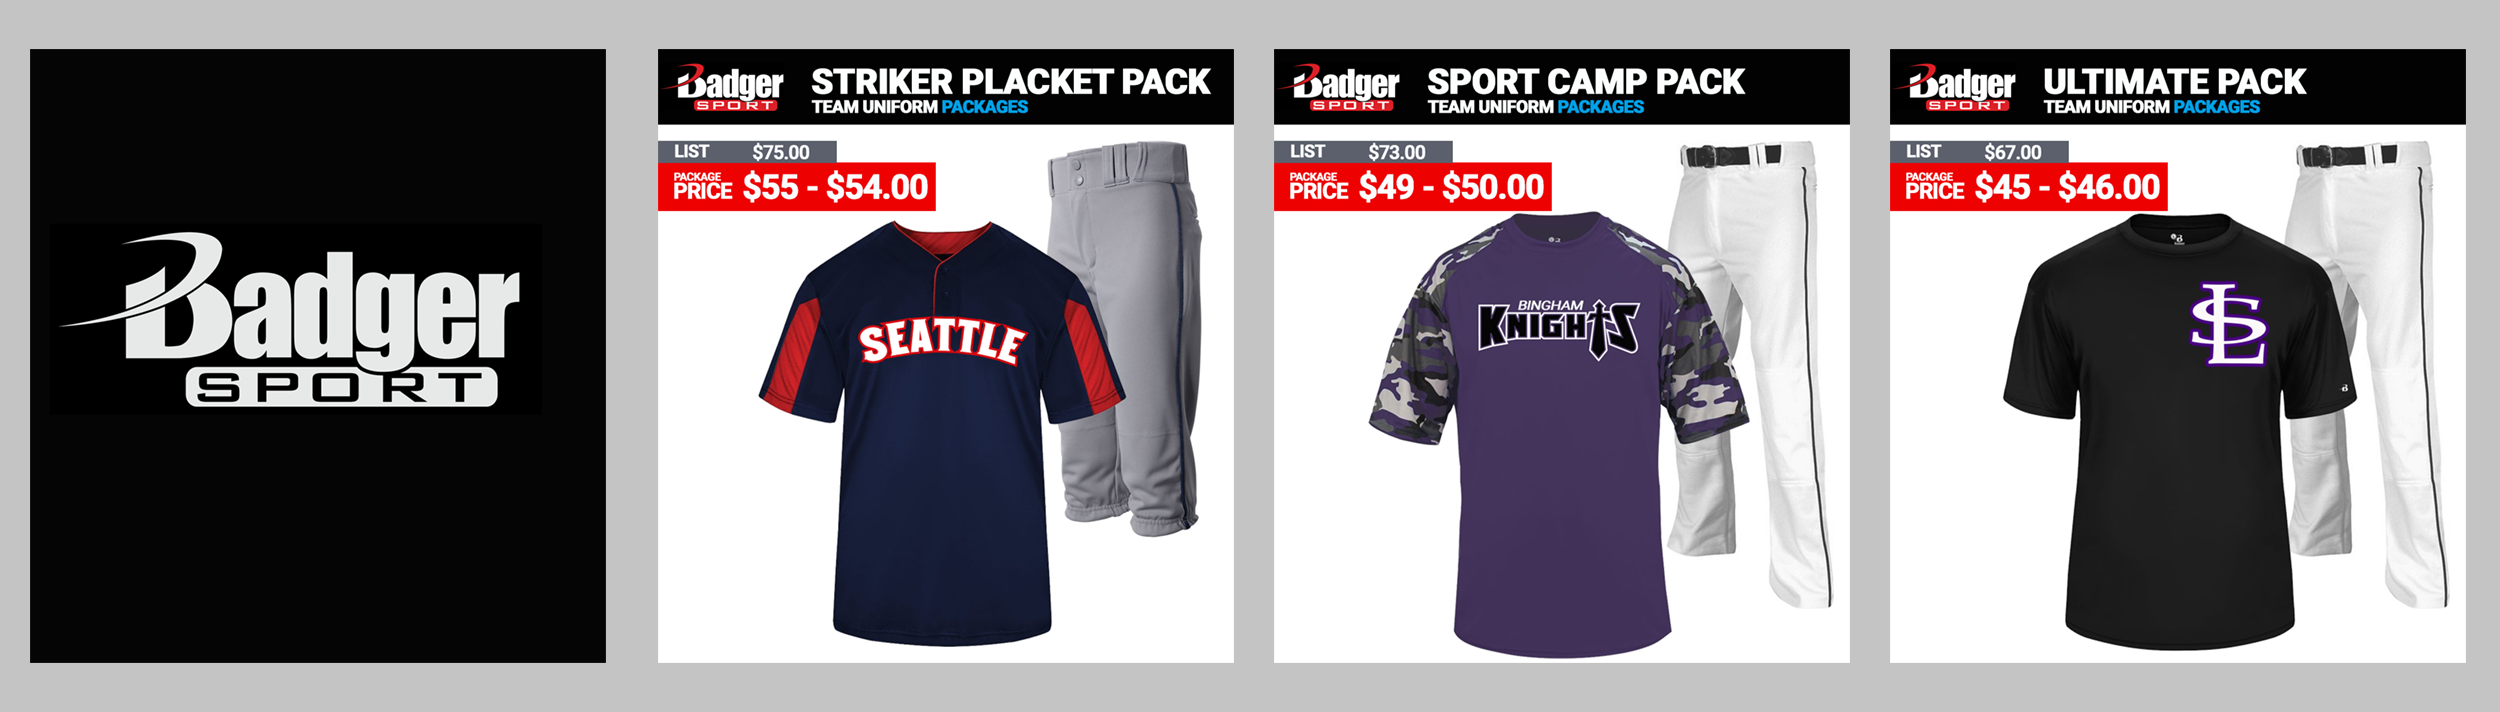 Badger Sport Baseball Uniform Packages